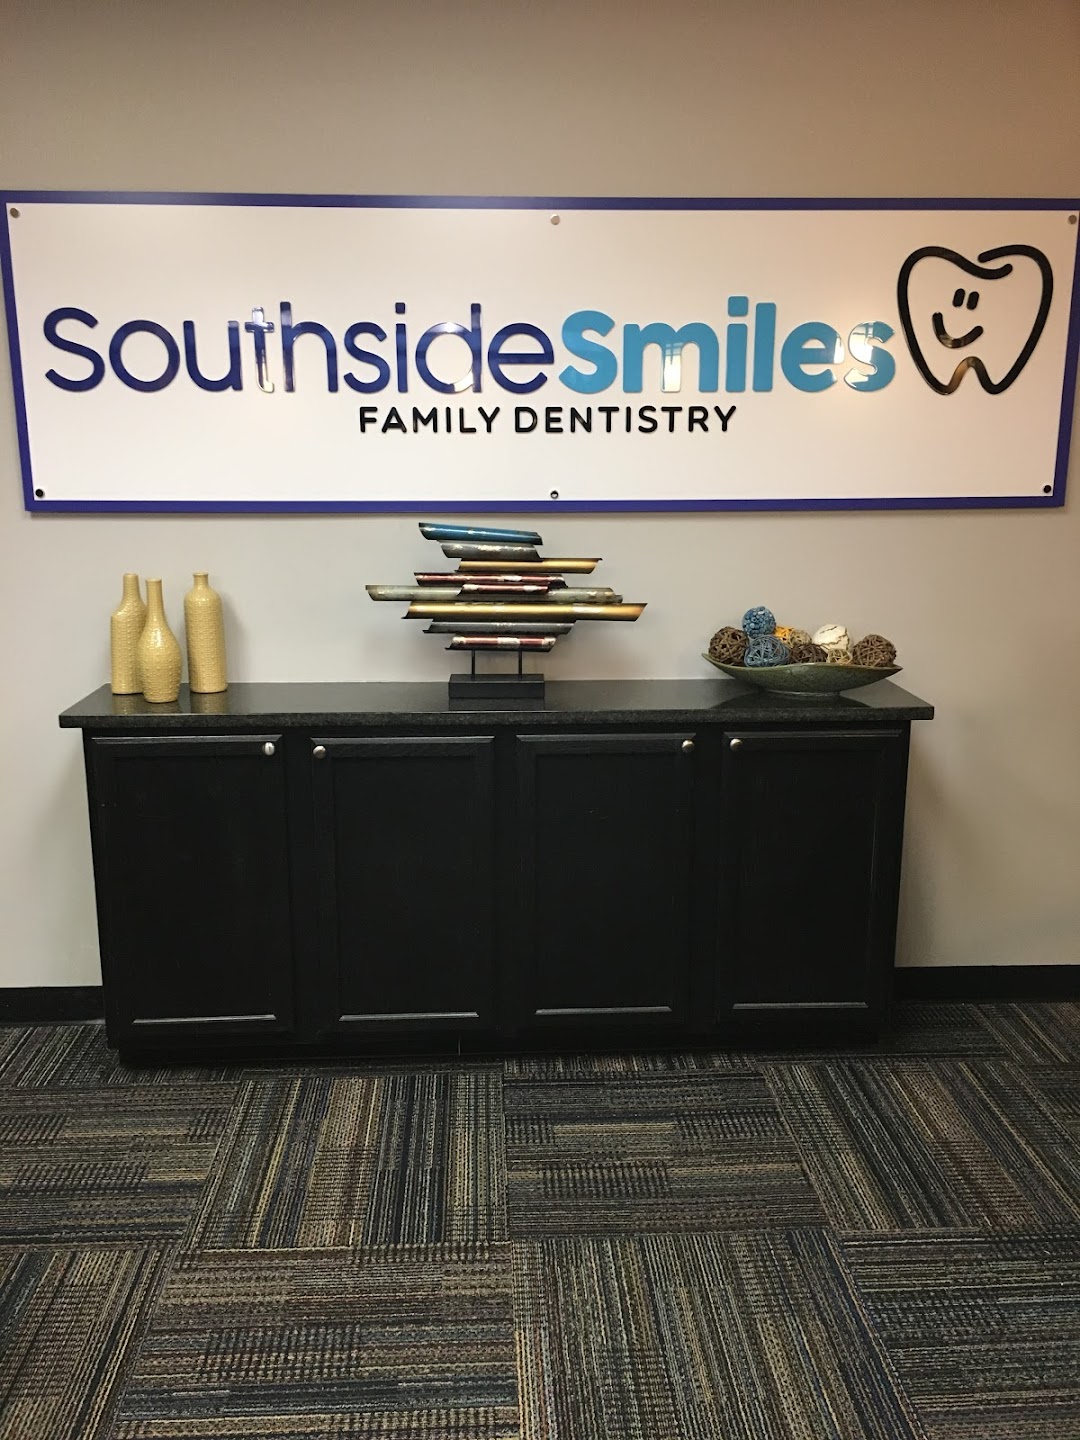 Southside Smiles Family Dentistry